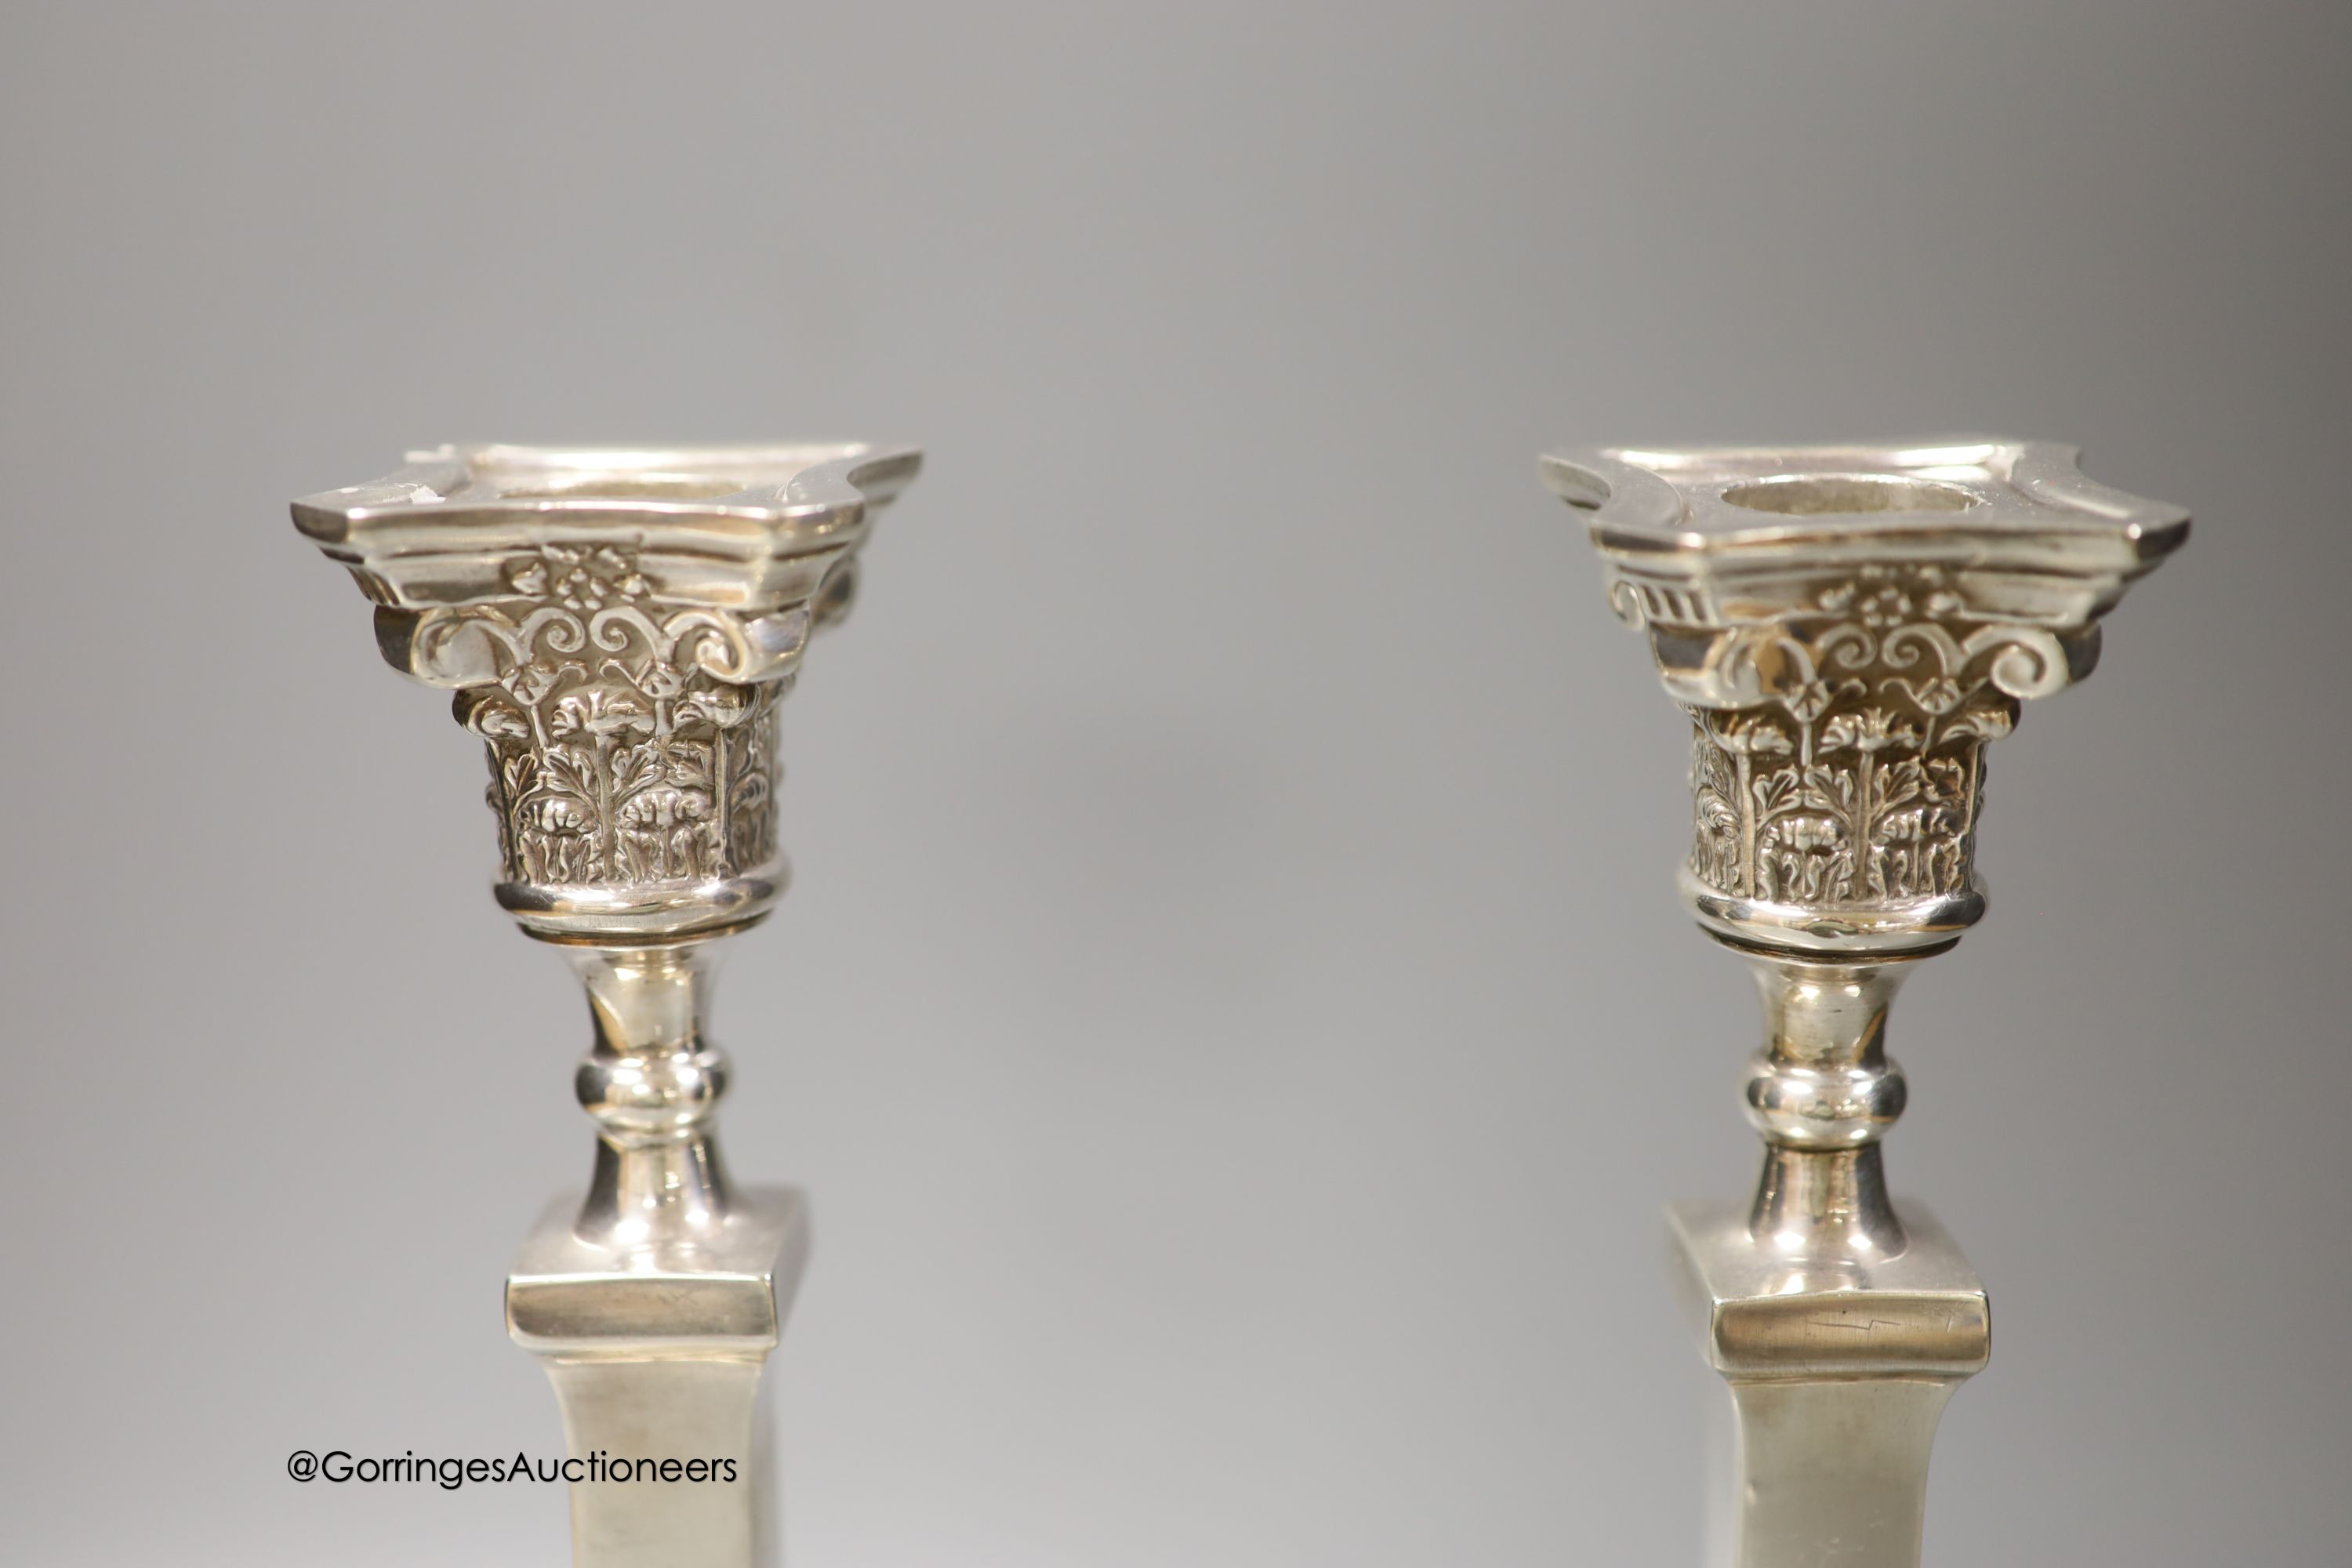 A pair of George V silver candlesticks, Britton, Gould & Co, Birmingham, 1934, 28.4cm, 20.5 oz, lacking sconces.